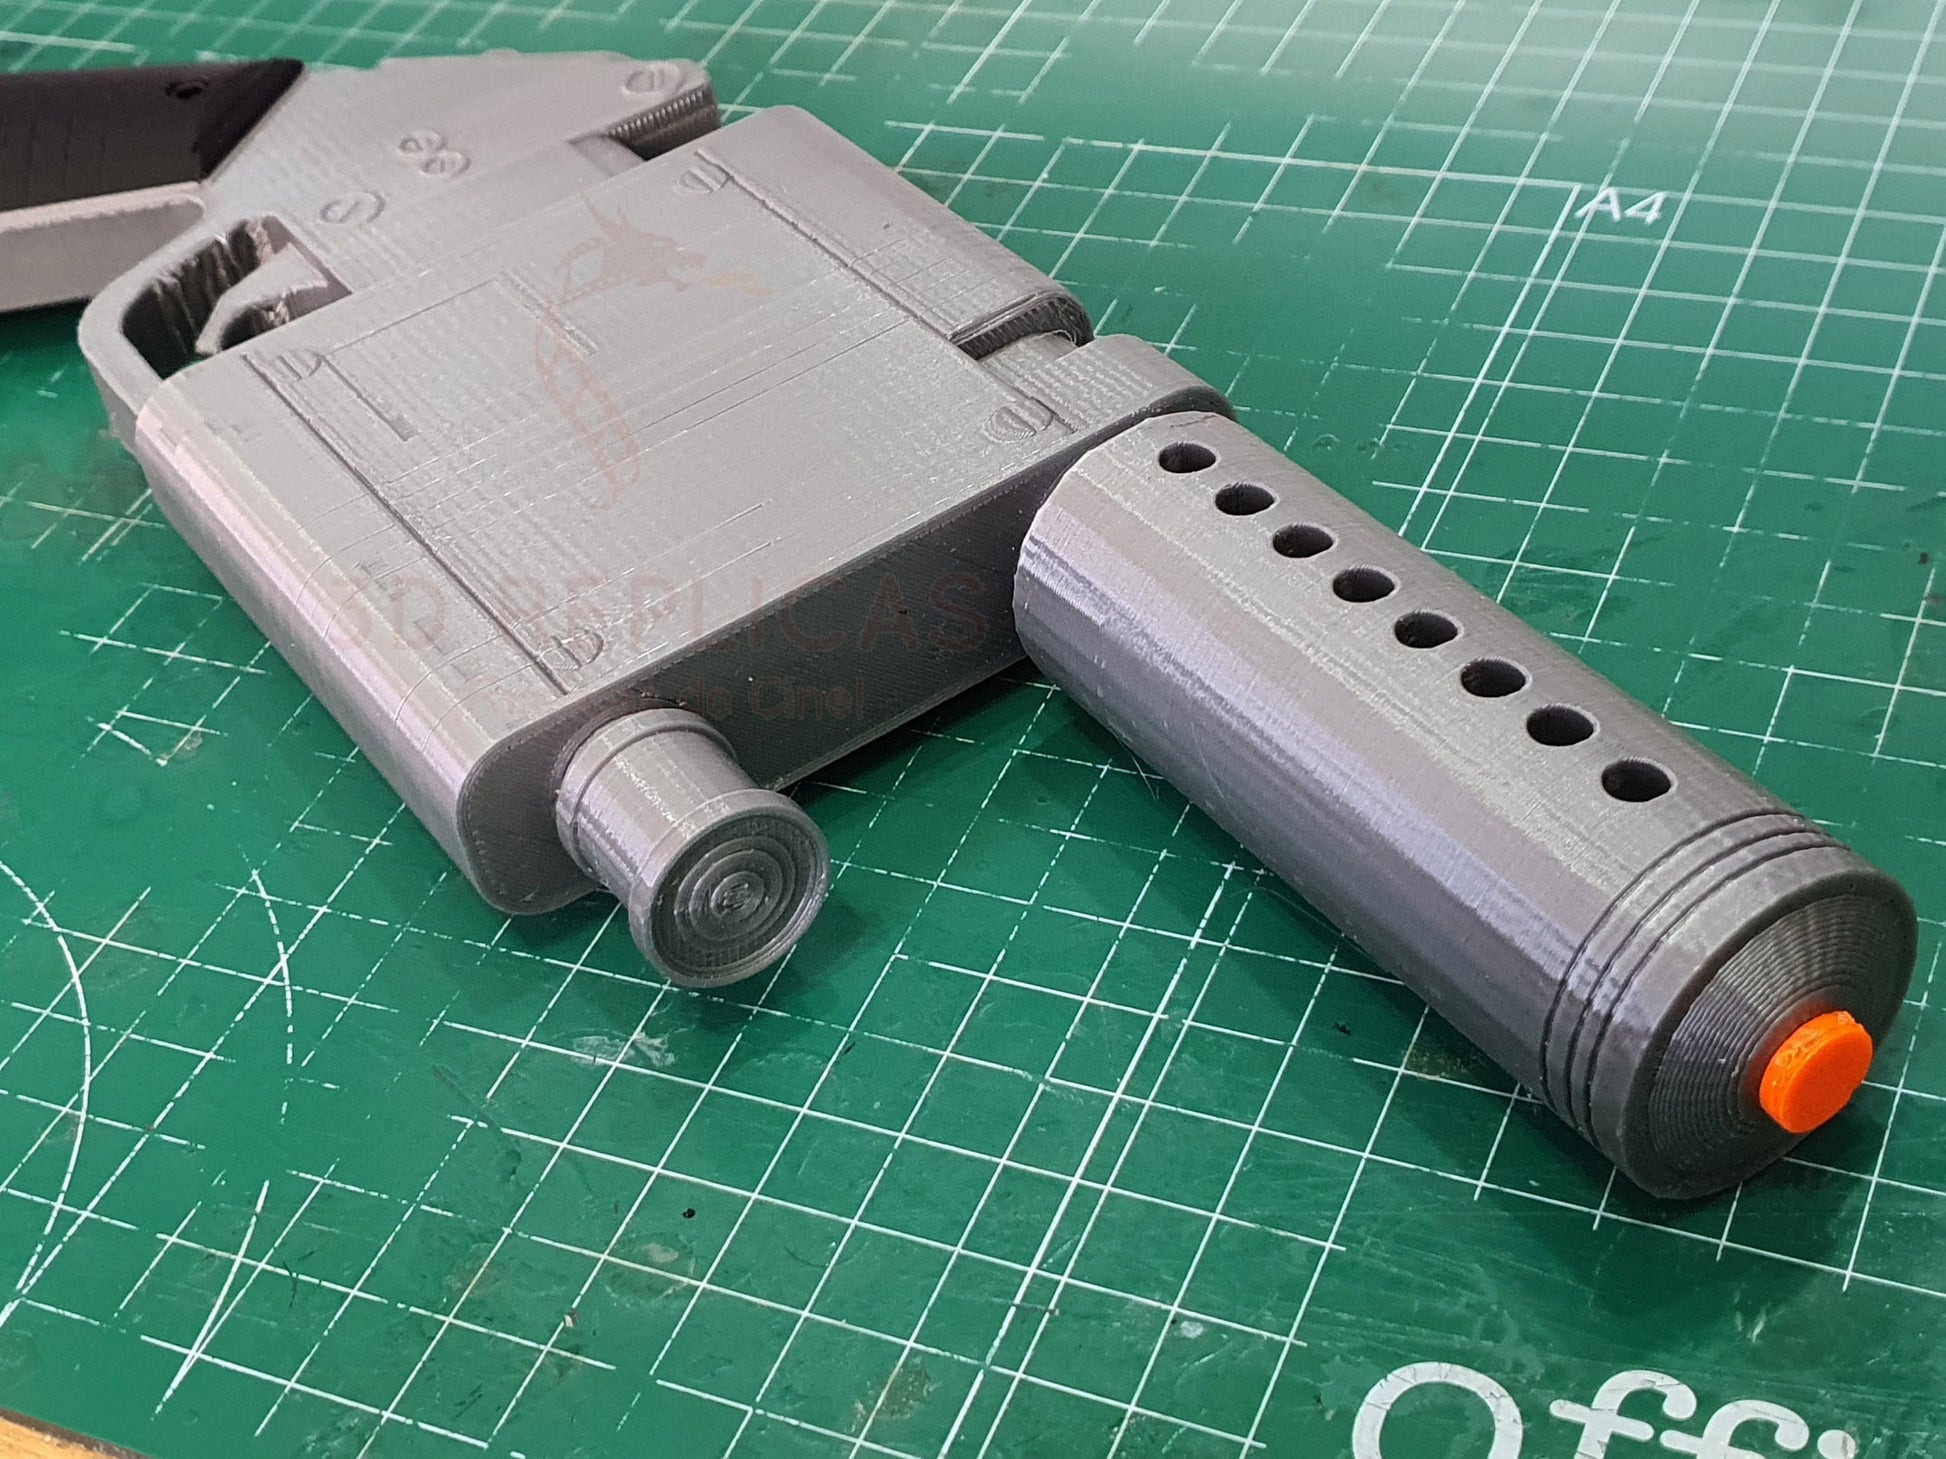 Star Wars Rey Blaster LPA NN-14 Pistol Gun Cosplay Prop Replica Episode VIII Force Awakens